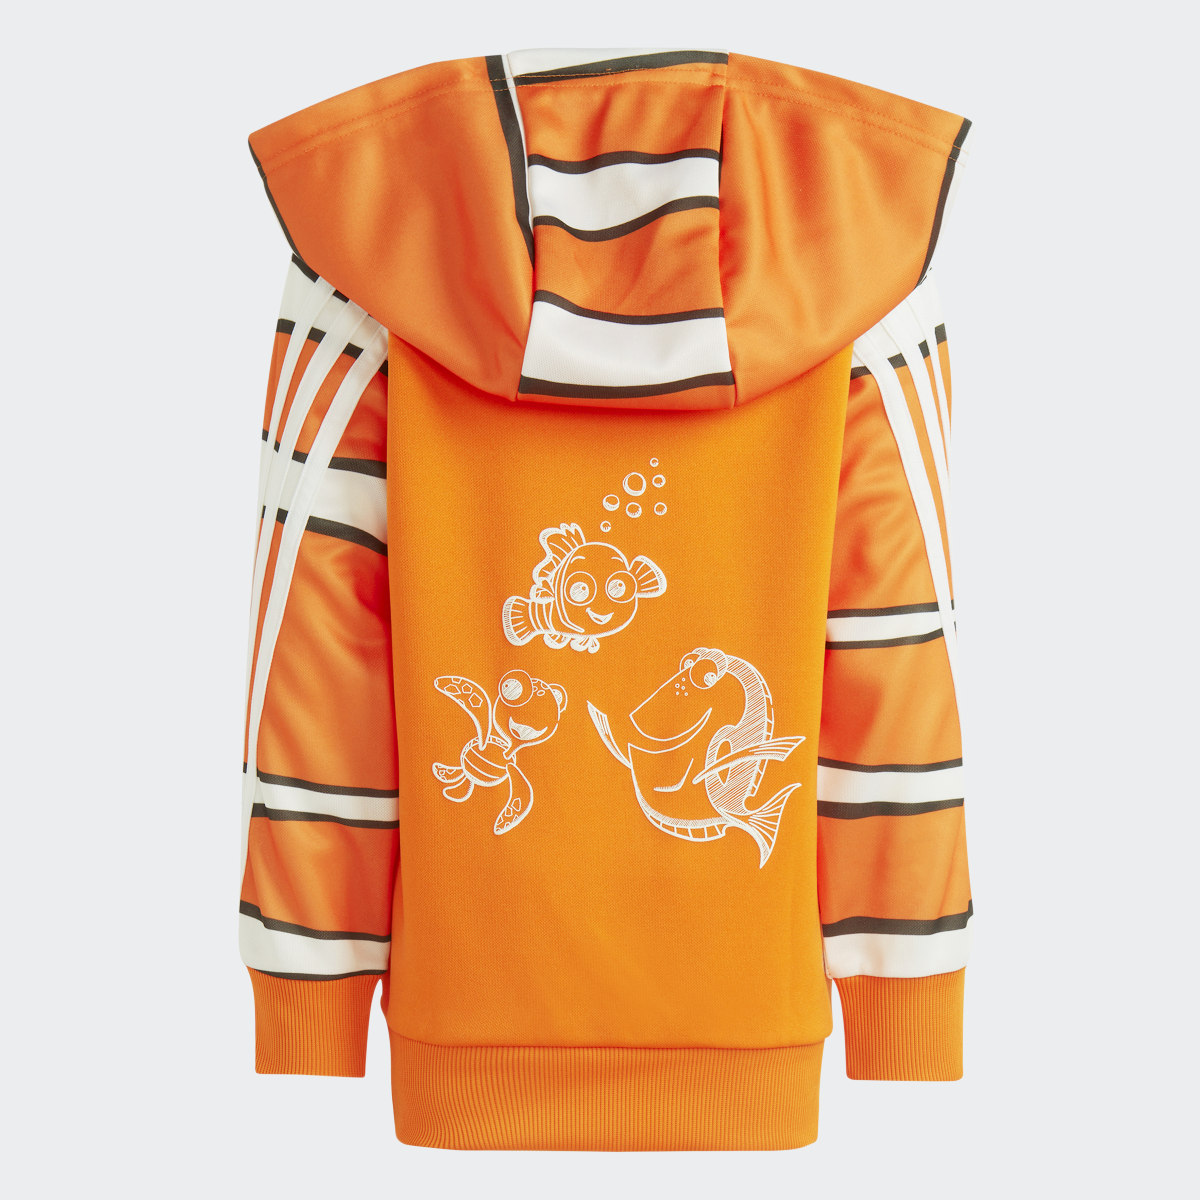 Adidas x Disney Finding Nemo Full-Zip Track Jacket. 8